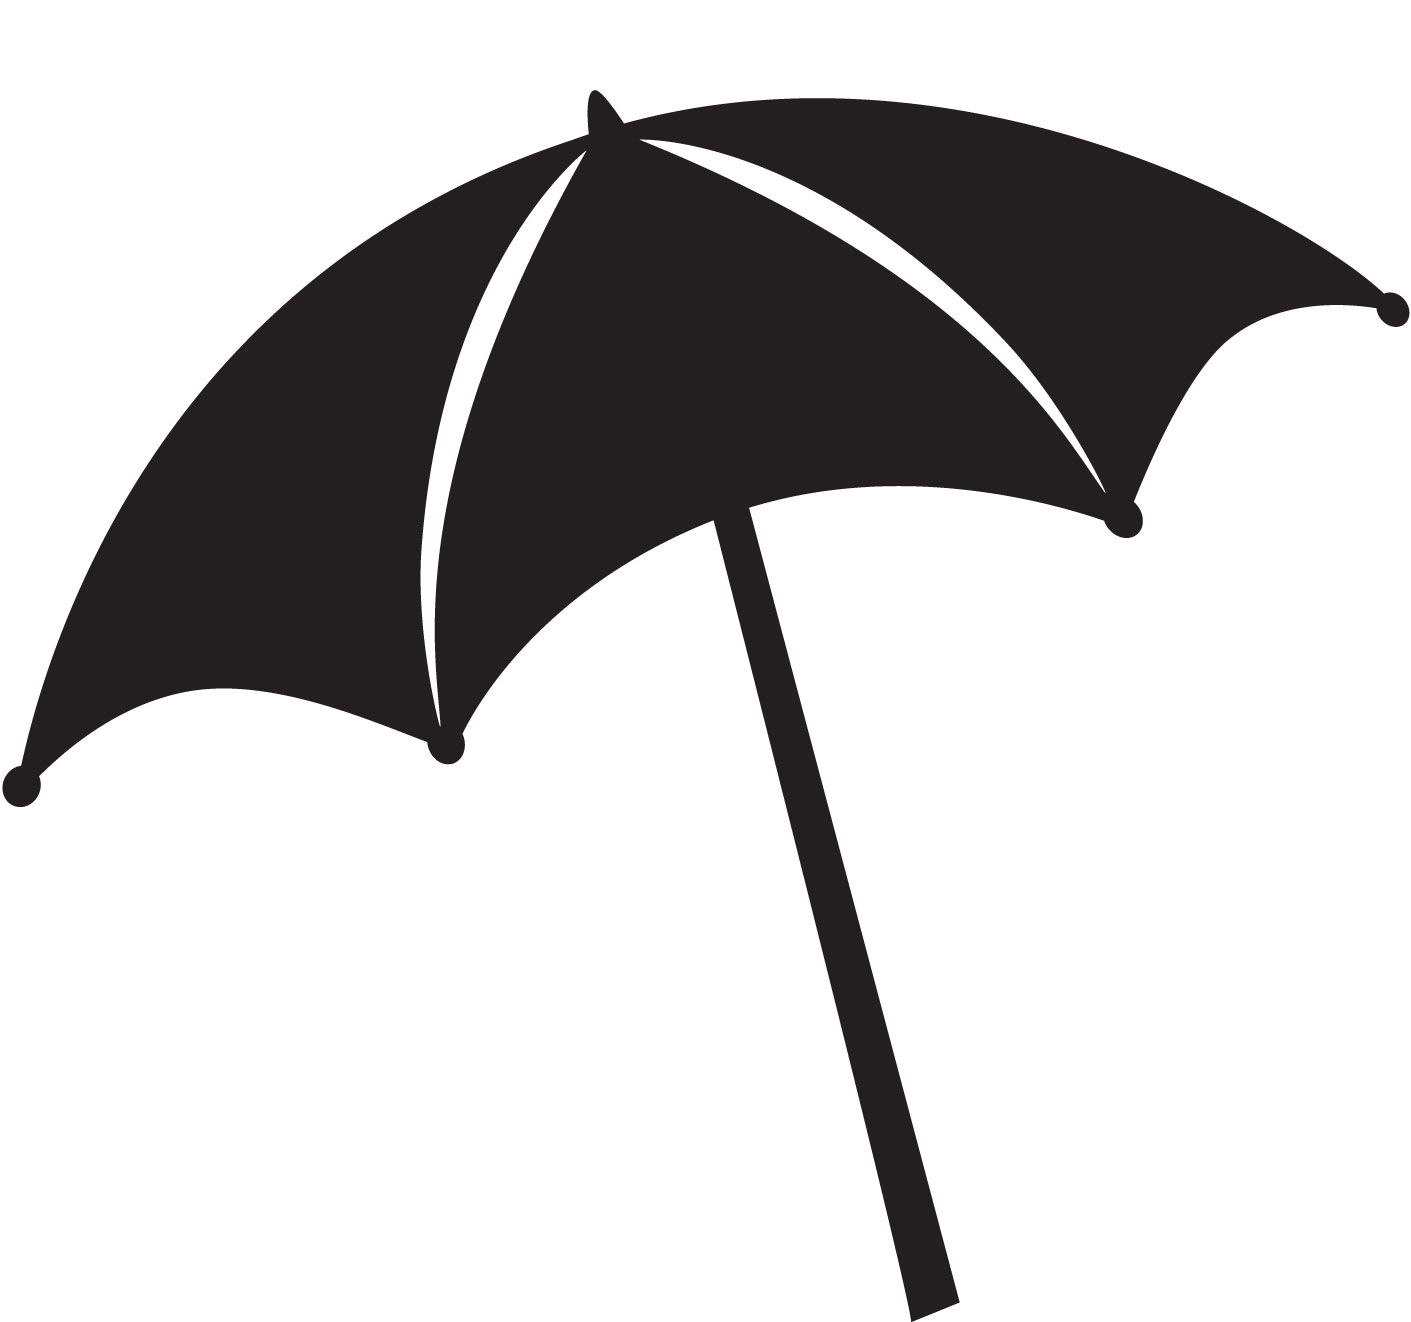 Free umbrella silhouette.